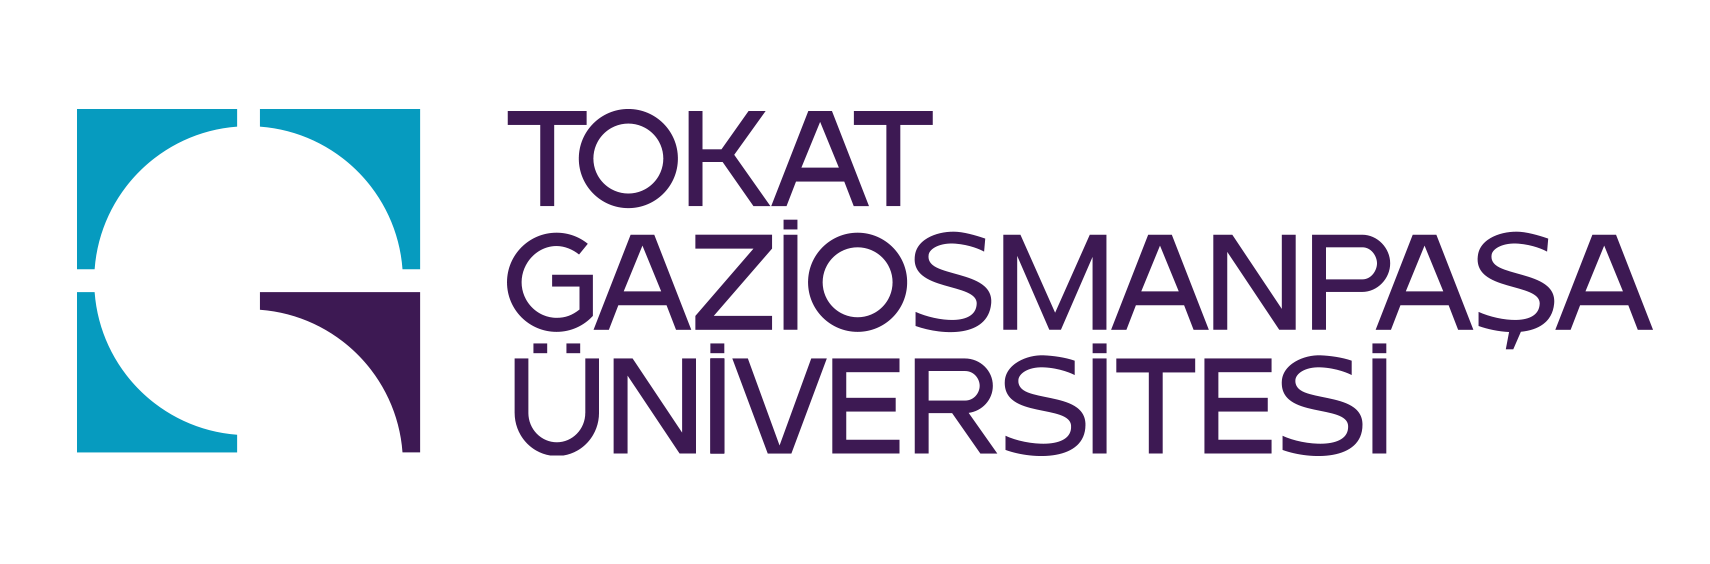 Tokat Gaziosmanpaşa University, Турция